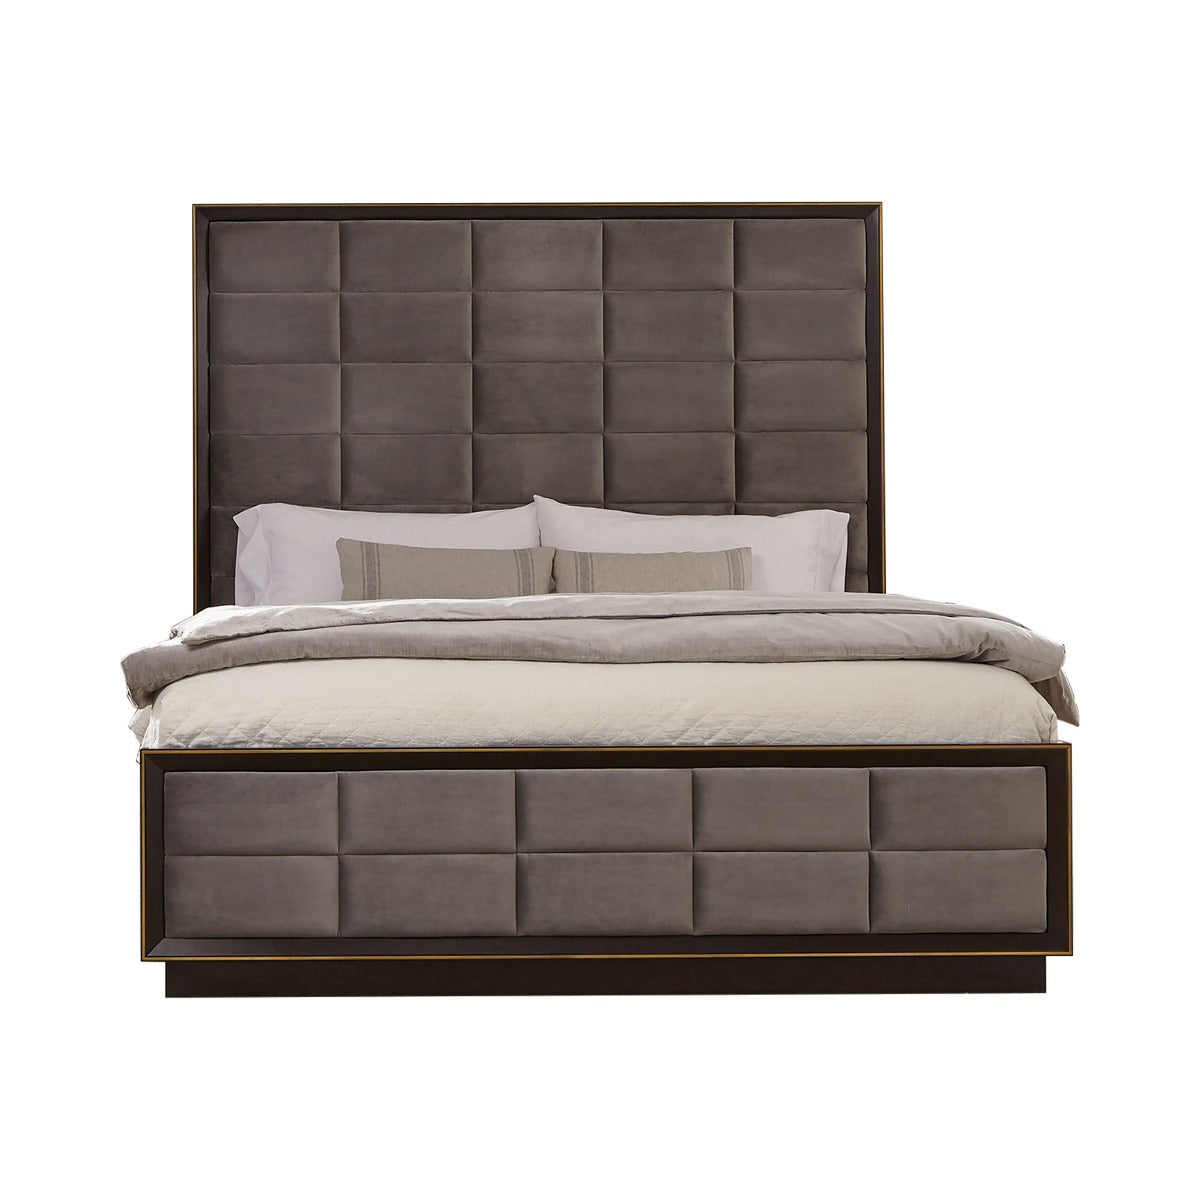 Durango By Coaster Upholstered Bedroom Set